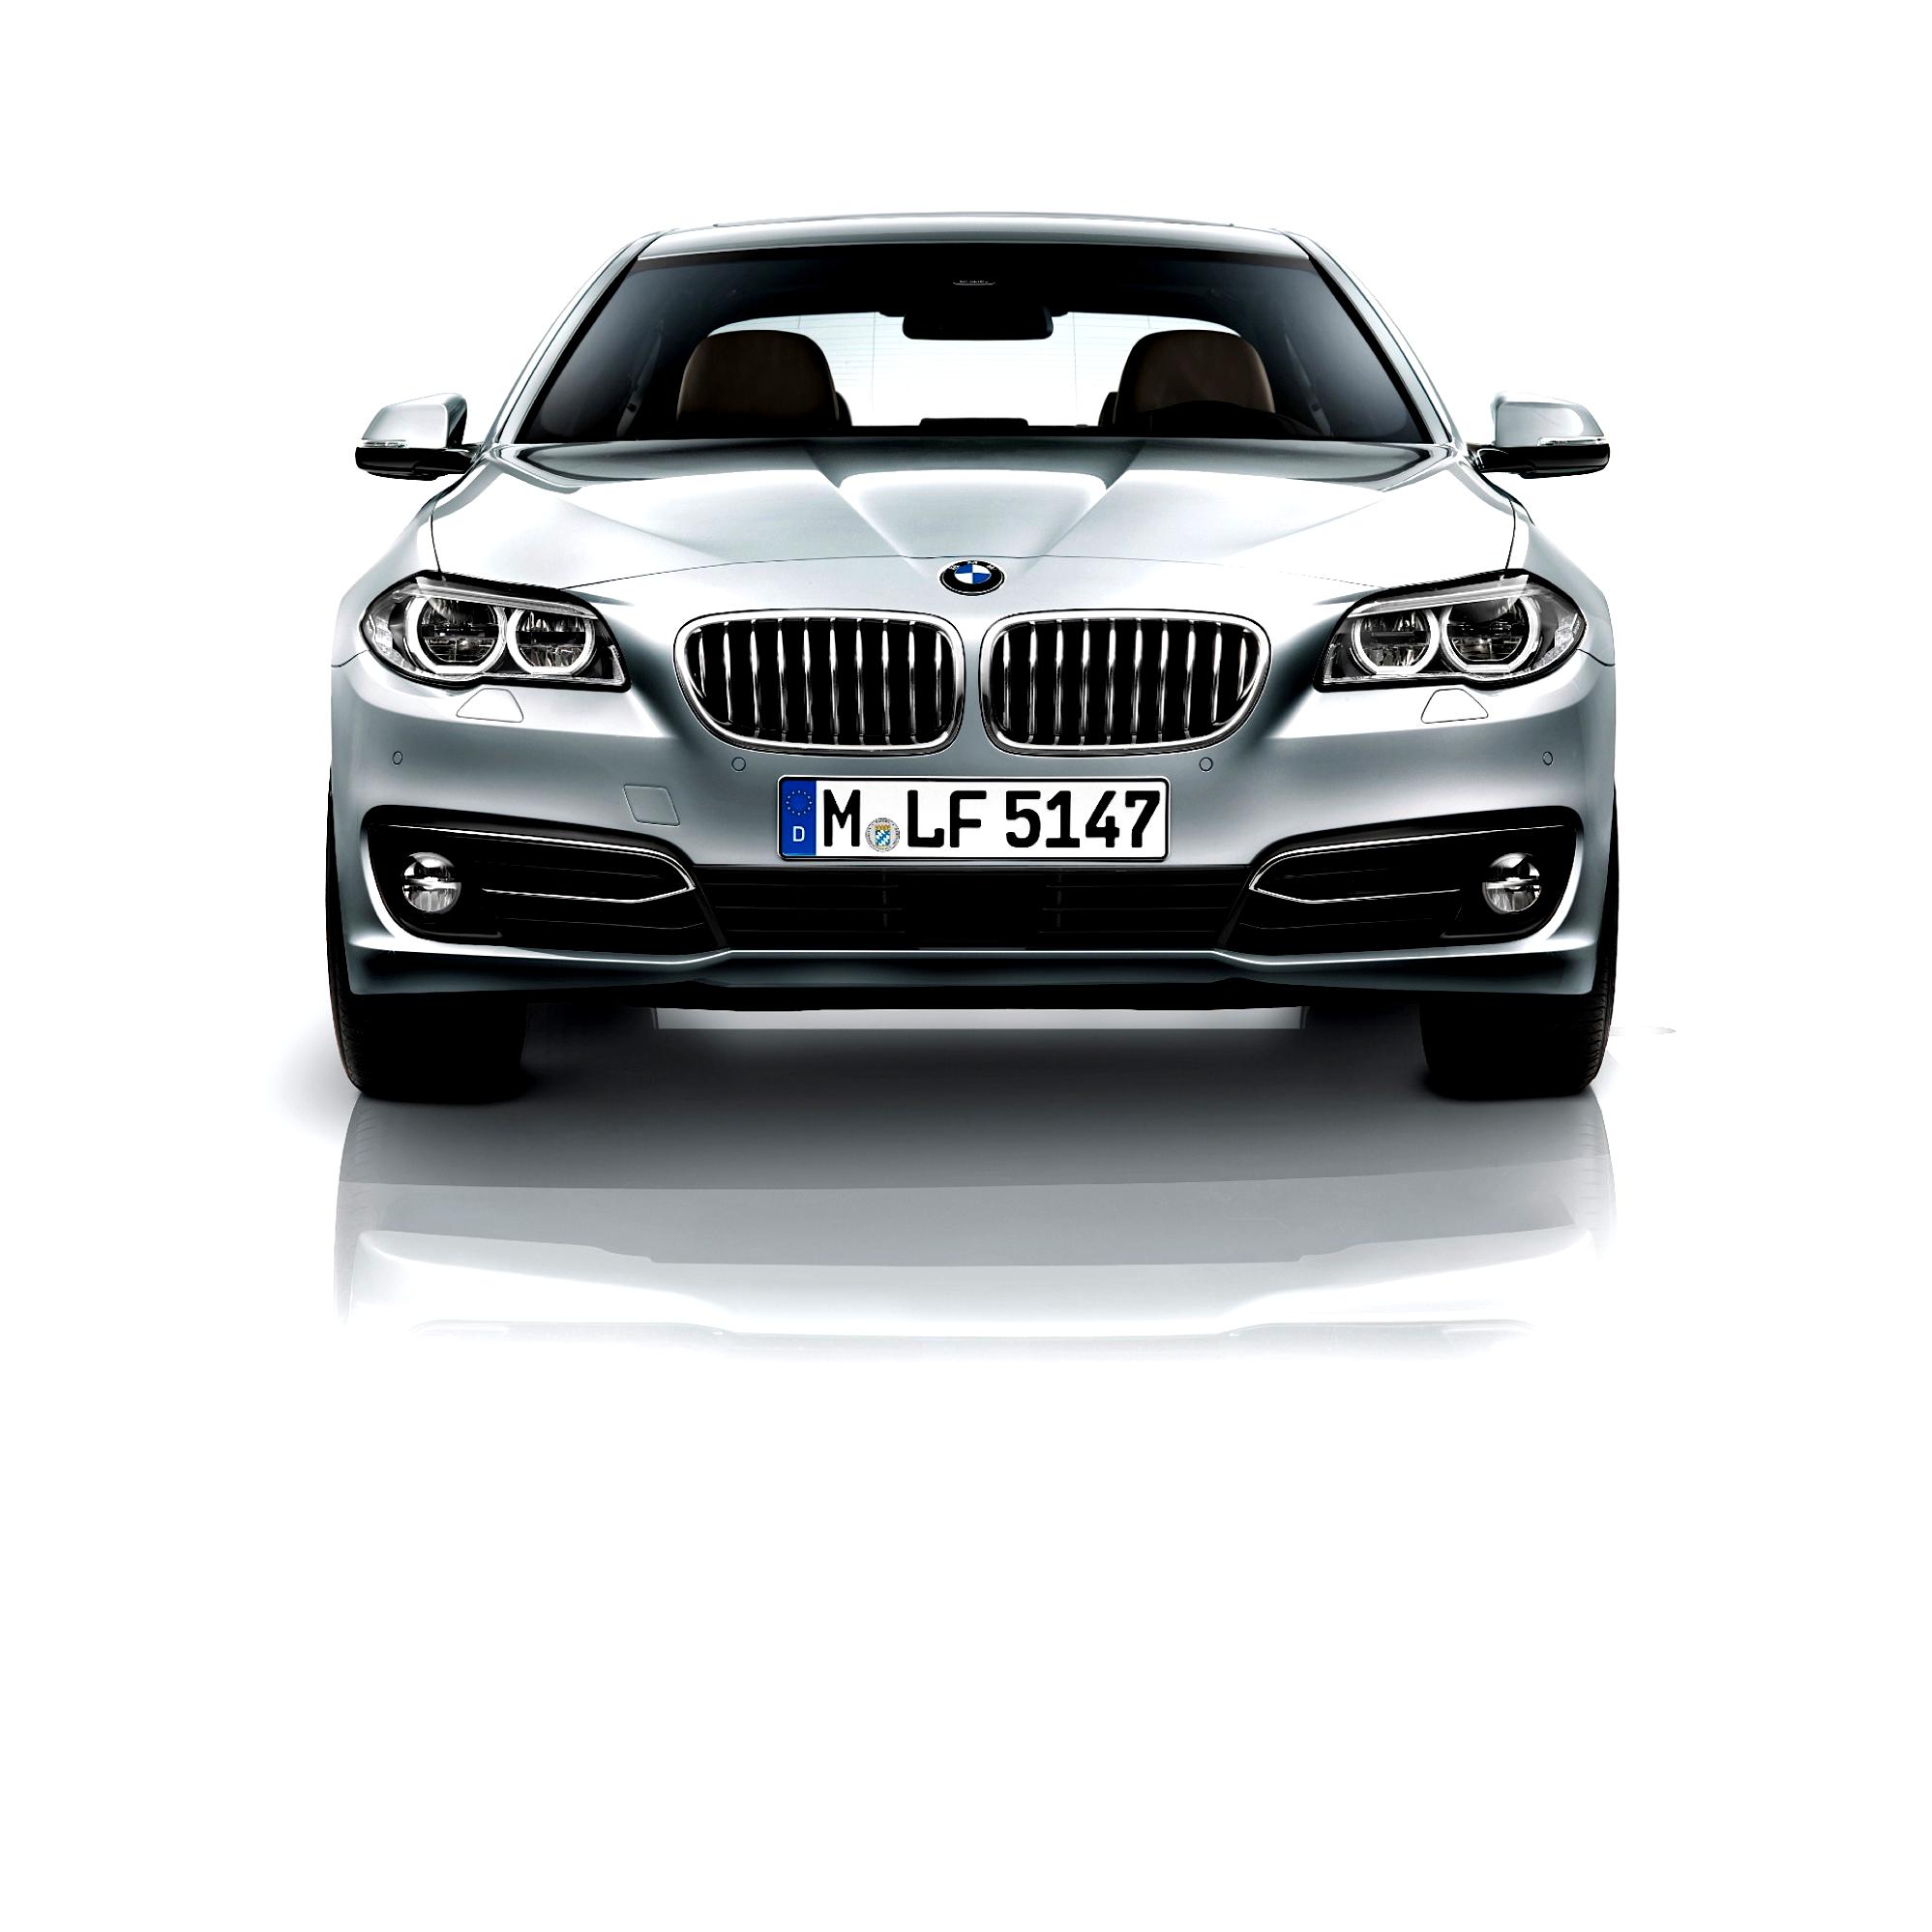 BMW 5 Series F10 LCI 2013 #55